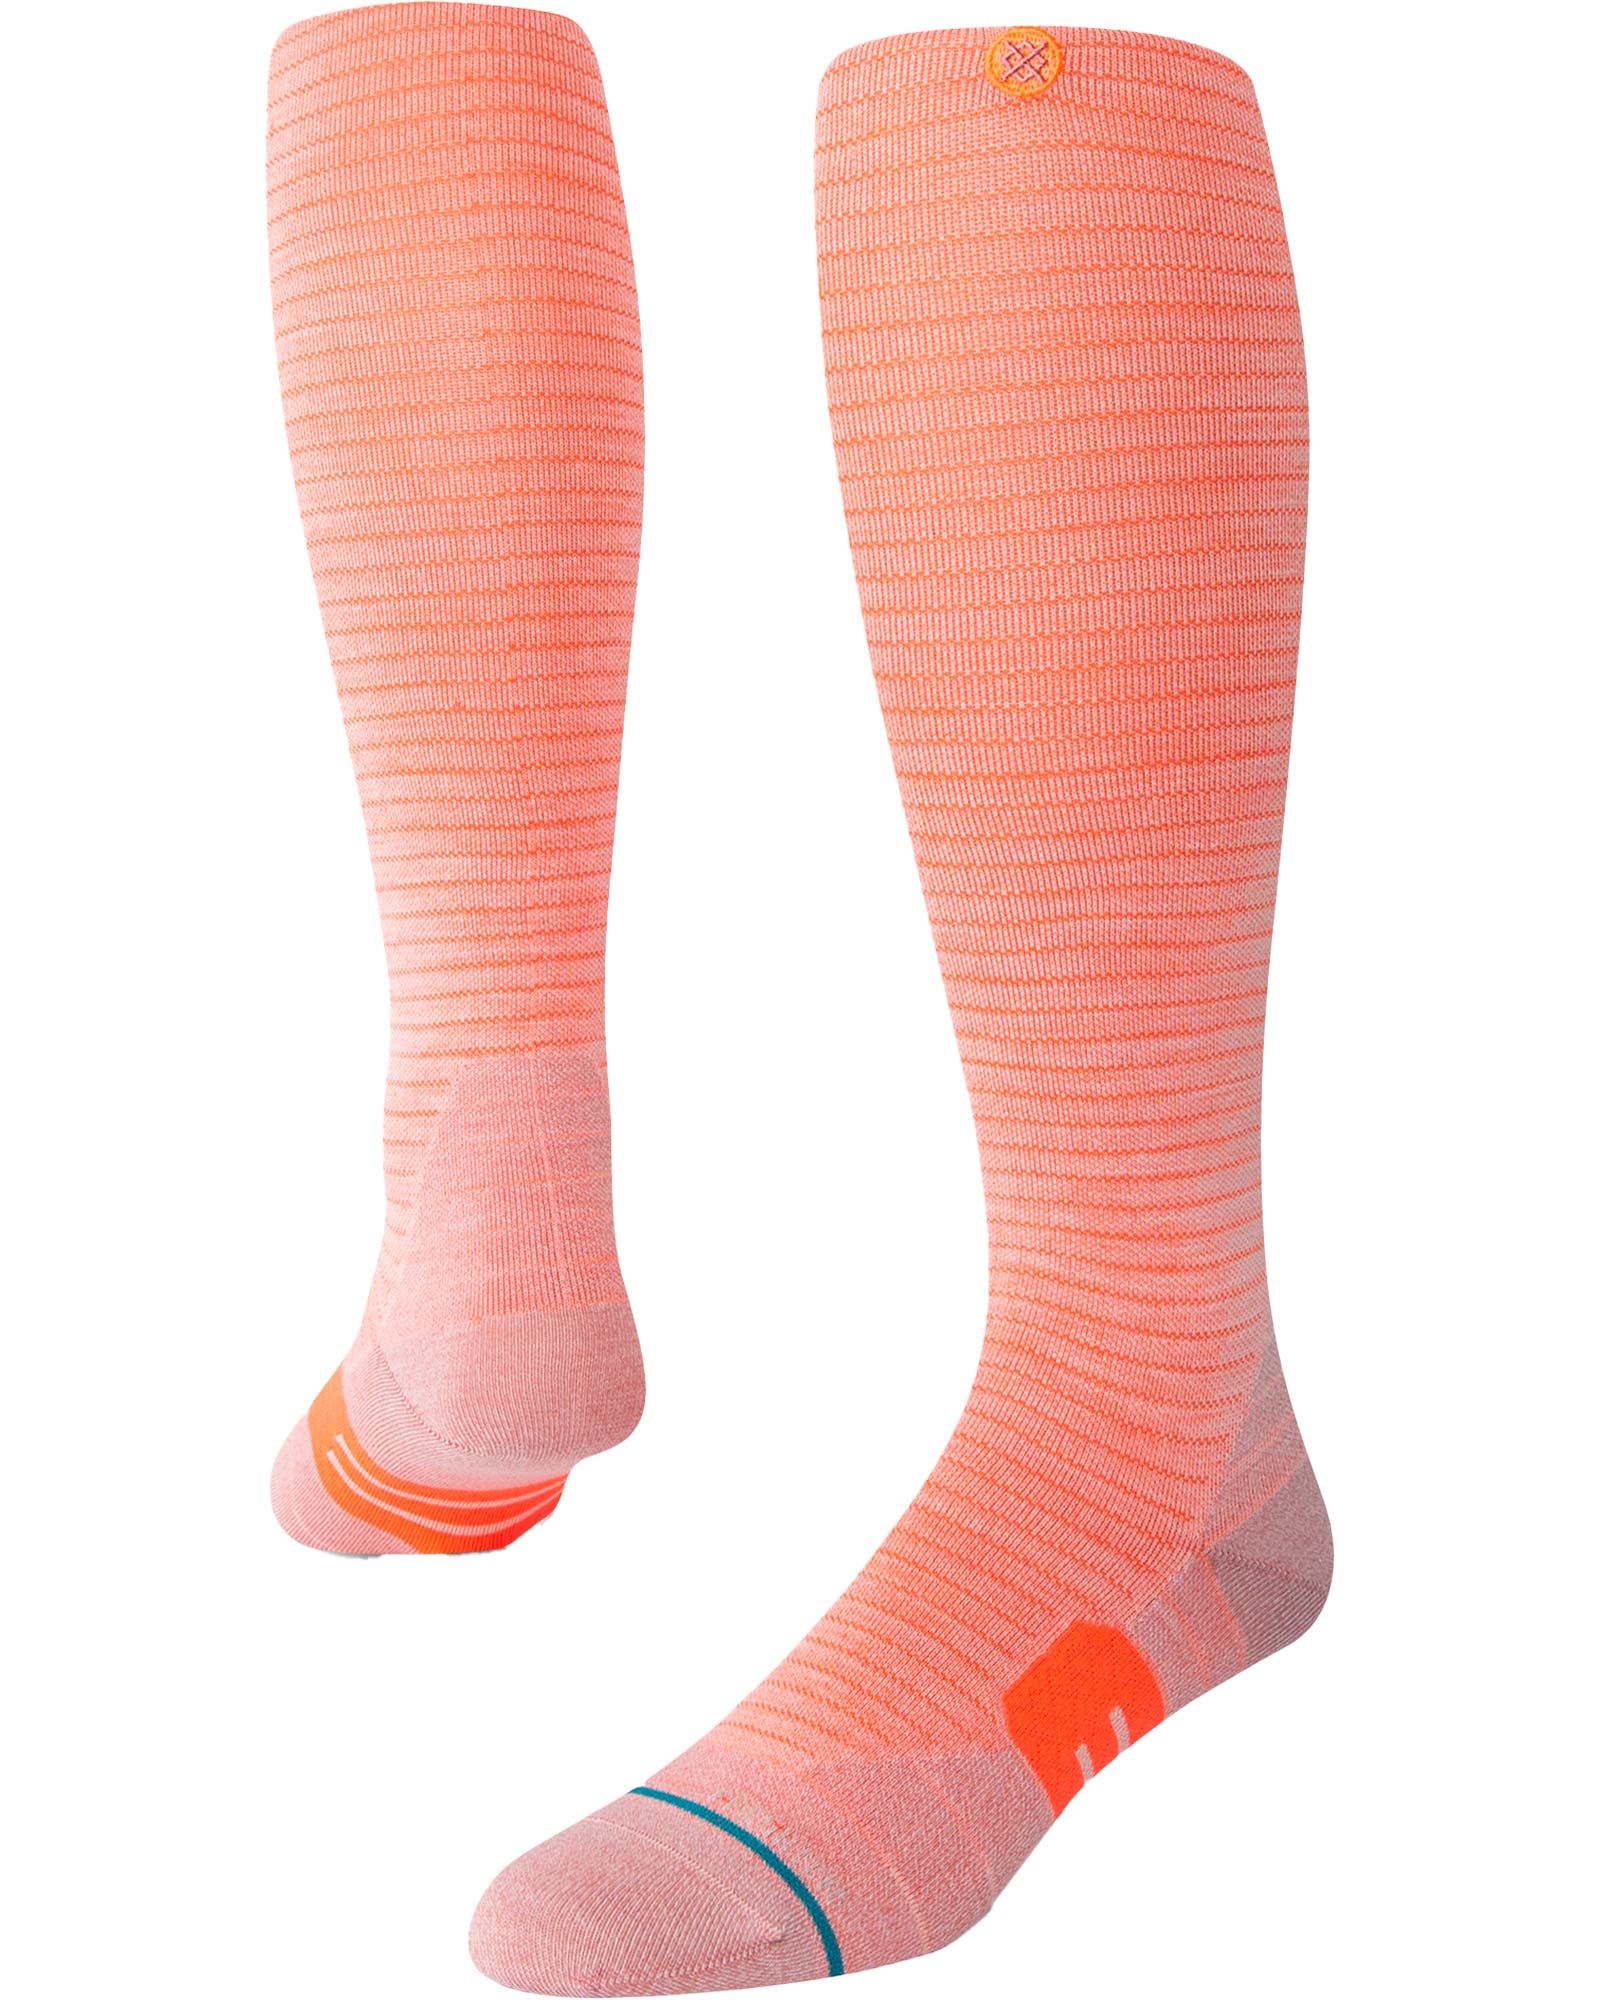 Stance Women's Amari Snow Socks